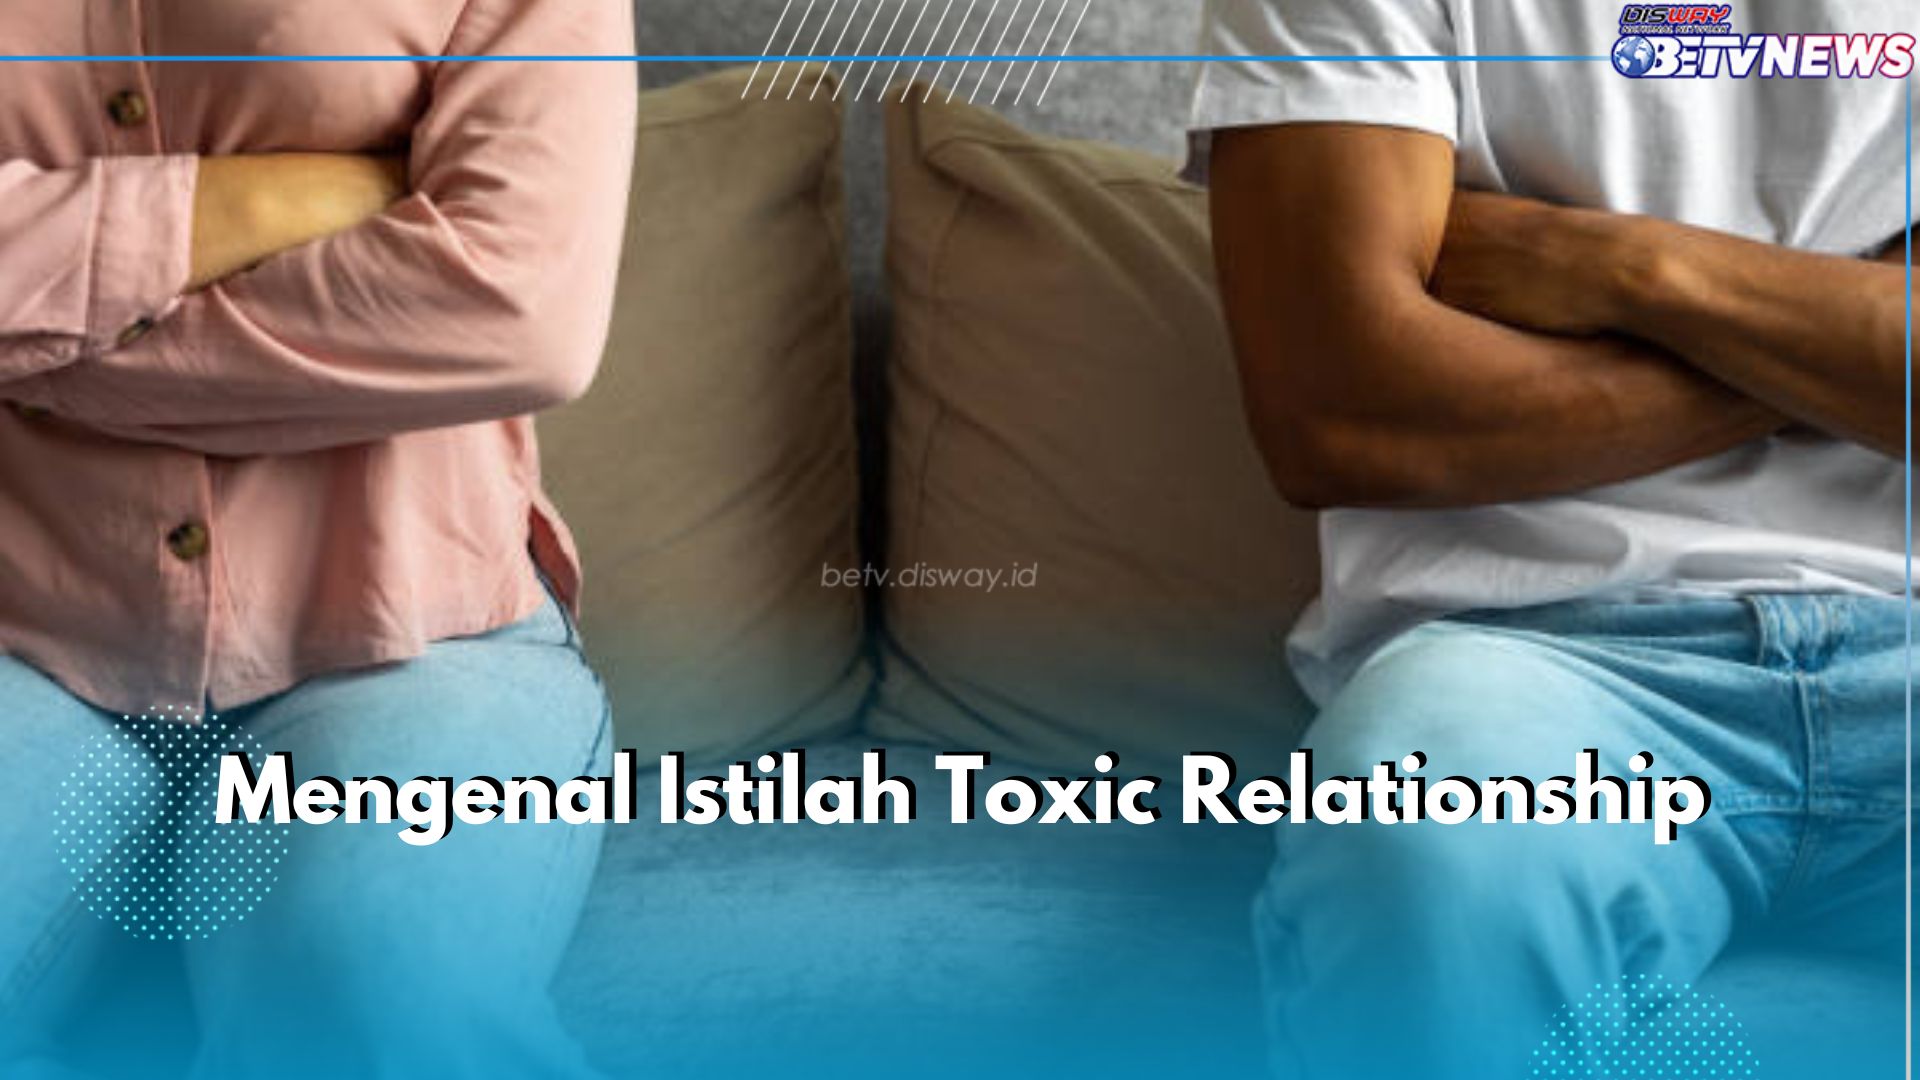 Pernah dengar Istilah Toxic Relationship? Yuk Cari Tahu Maknanya di Sini